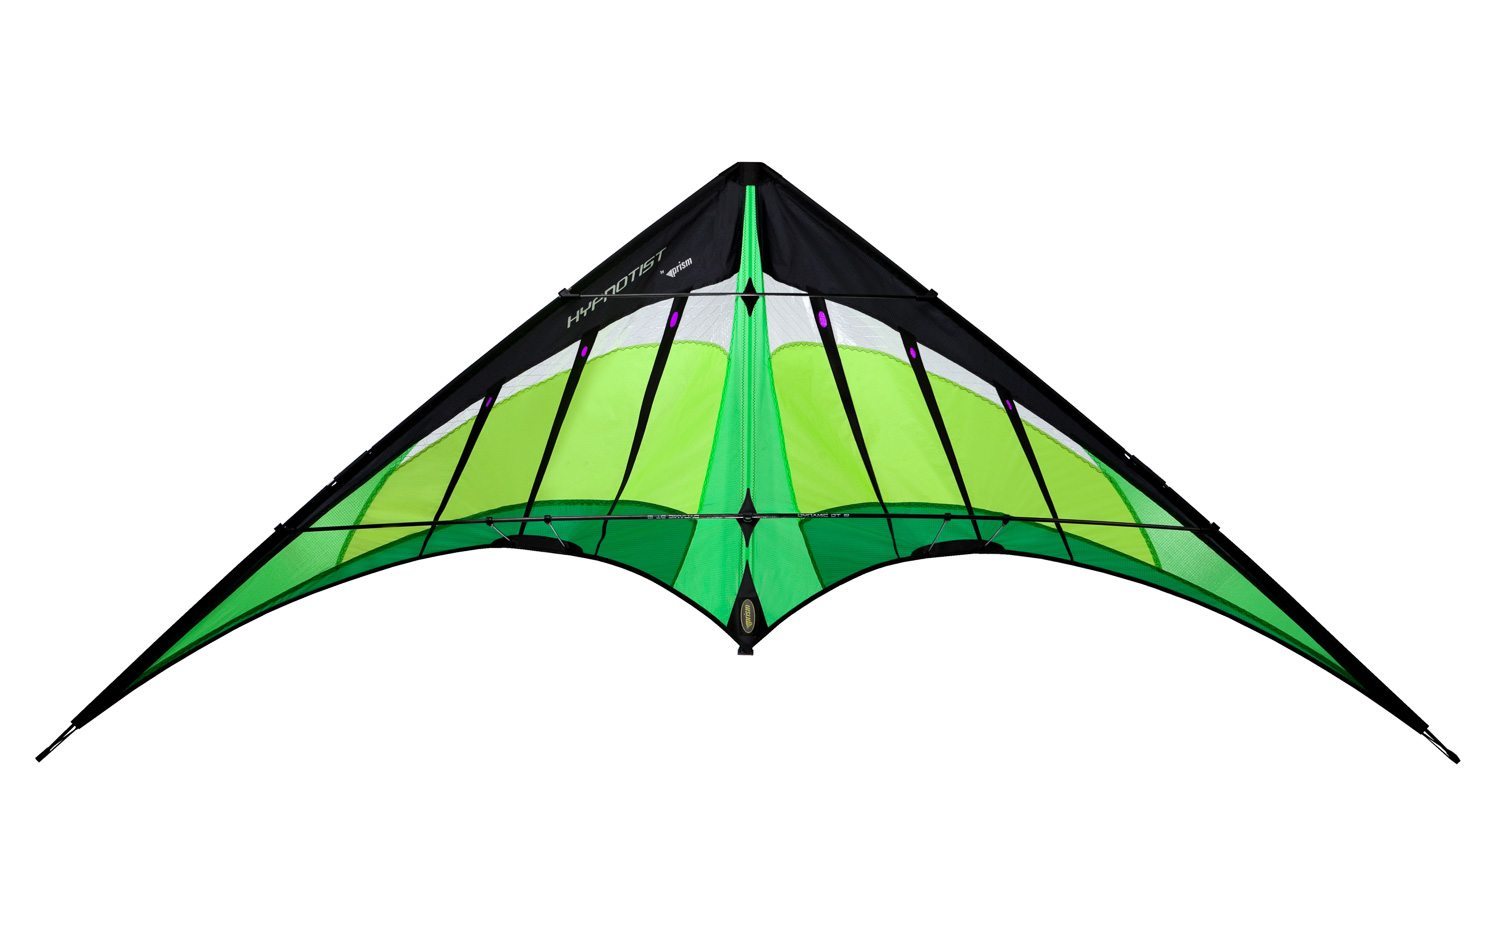 Hypnotist | Prism Kite Technology